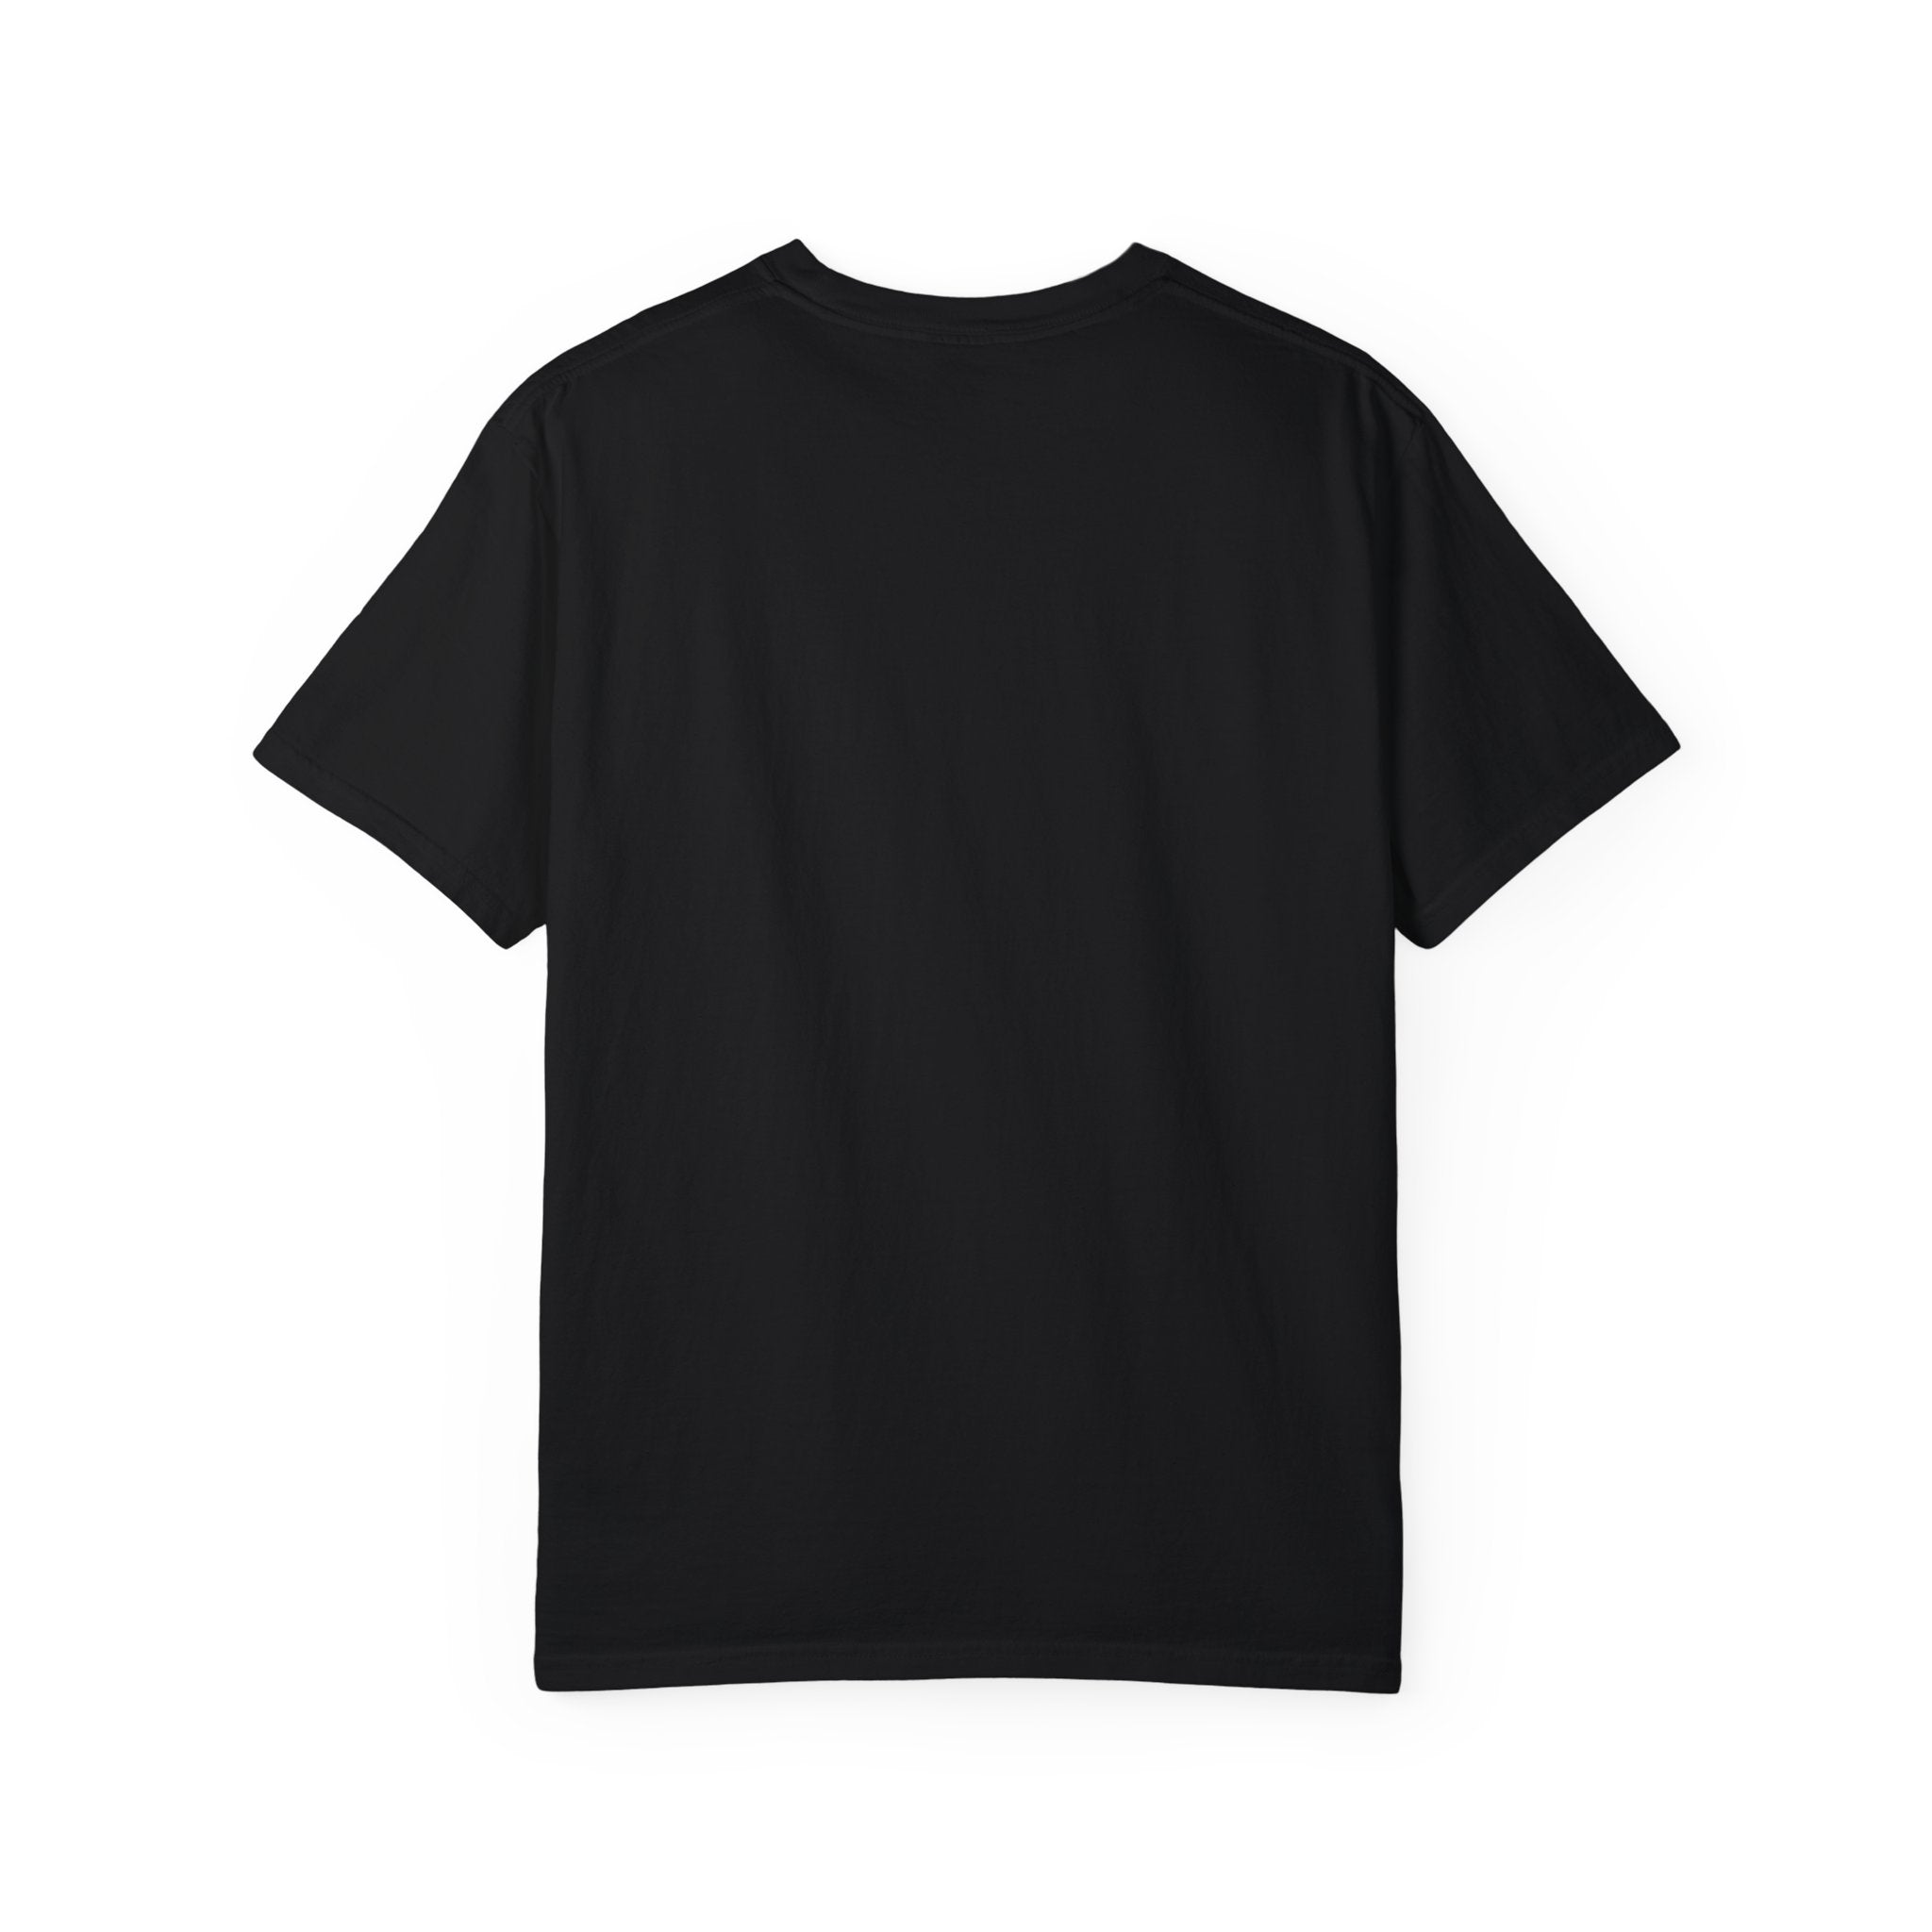 INHALE EXHALE Unisex Garment-Dyed T-shirt